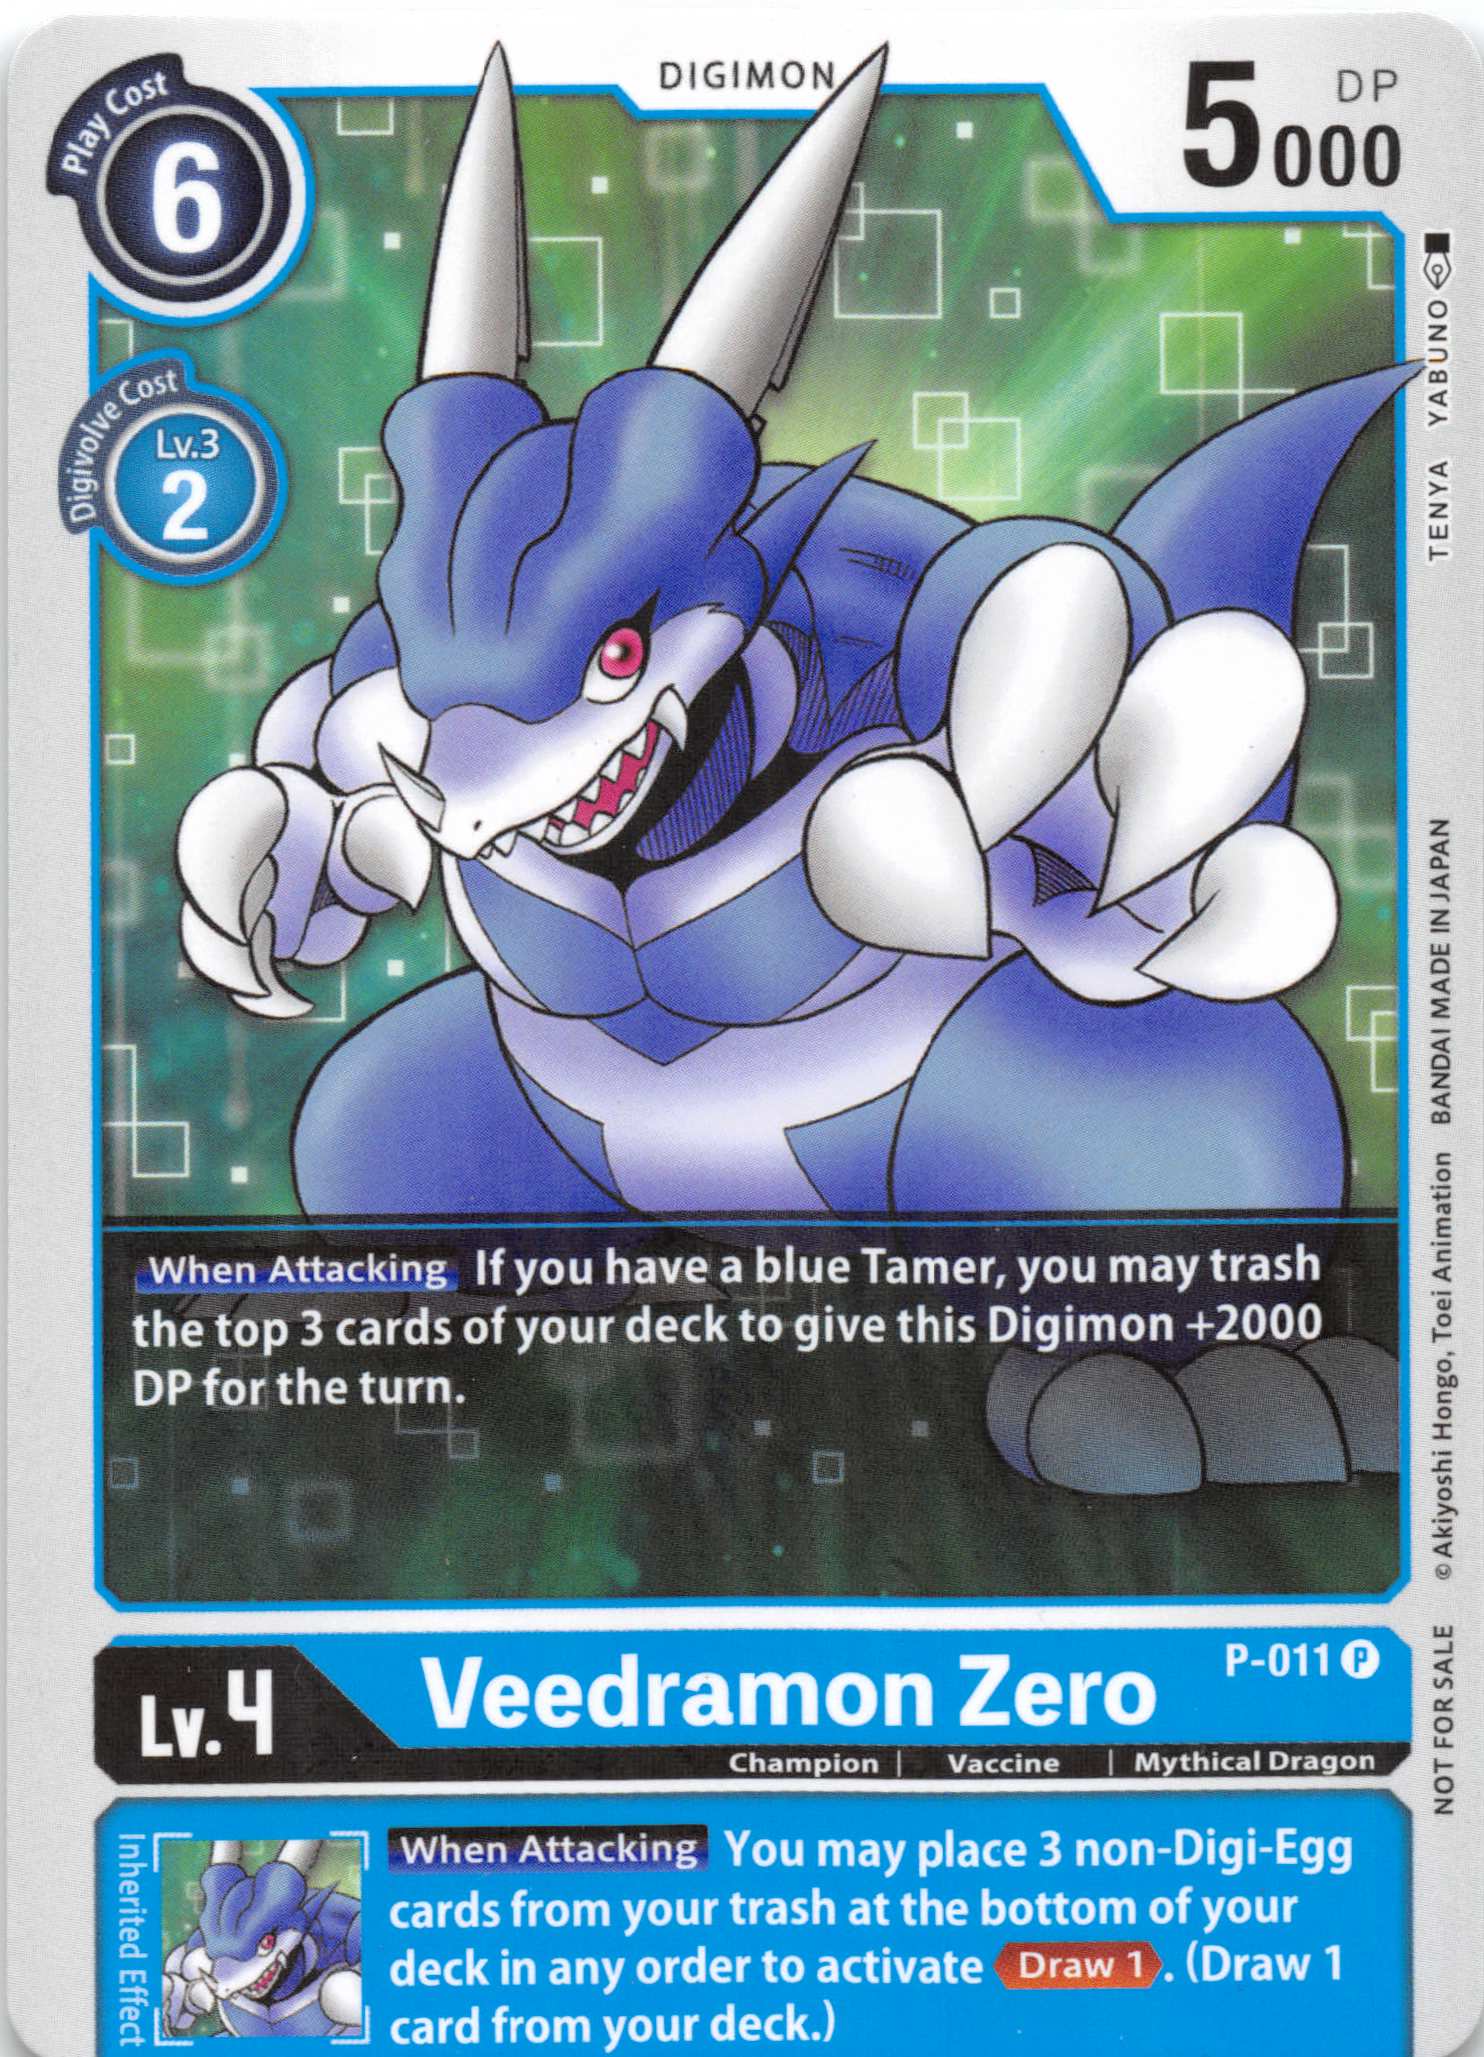 Veedramon Zero - P-011 [P-011] [Digimon Promotion Cards] Foil